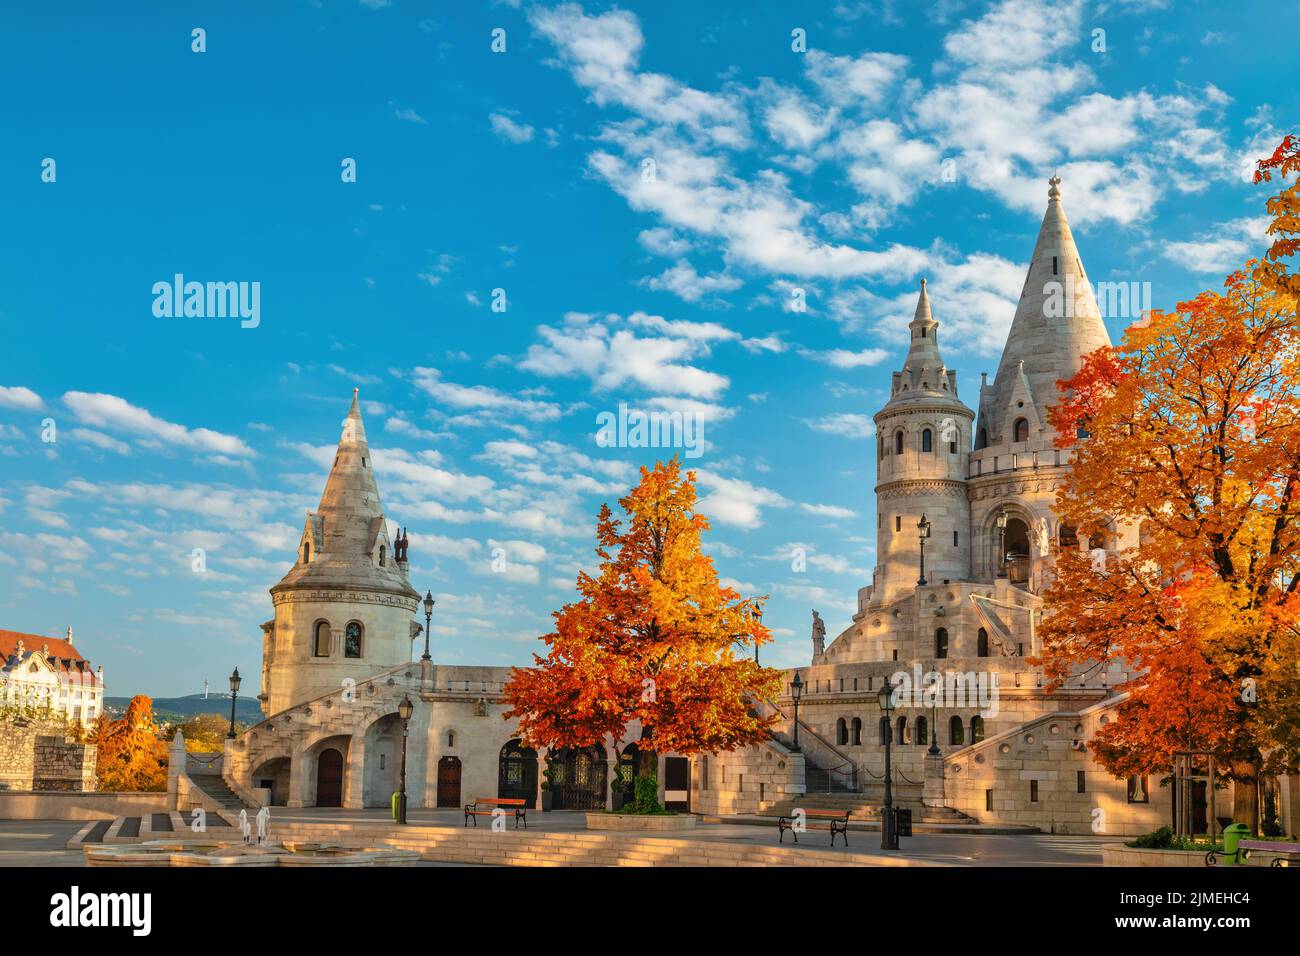 Budapest Hungary, city skyline at Fisherman's Bastion with autumn foliage season Stock Photo